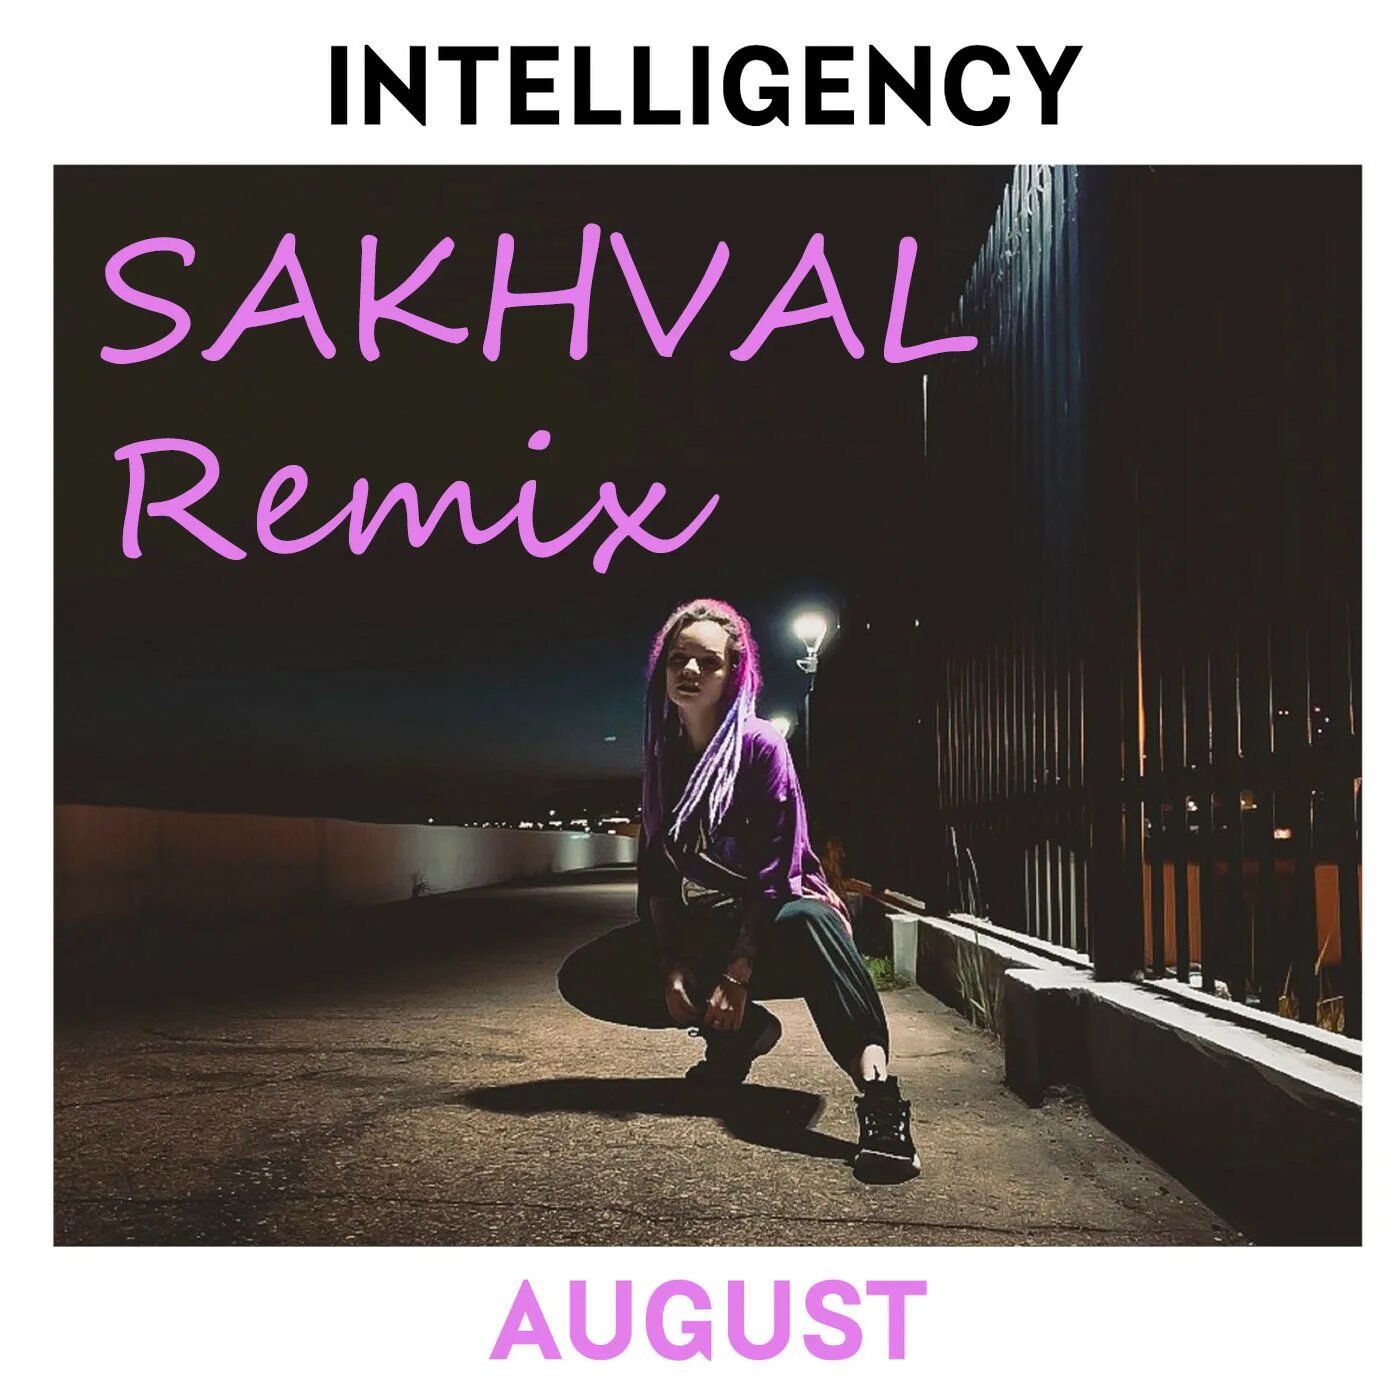 Intelligence группа August. Август певец Intelligence. Август Intelligence обложка. August песня. Extended remix mp3